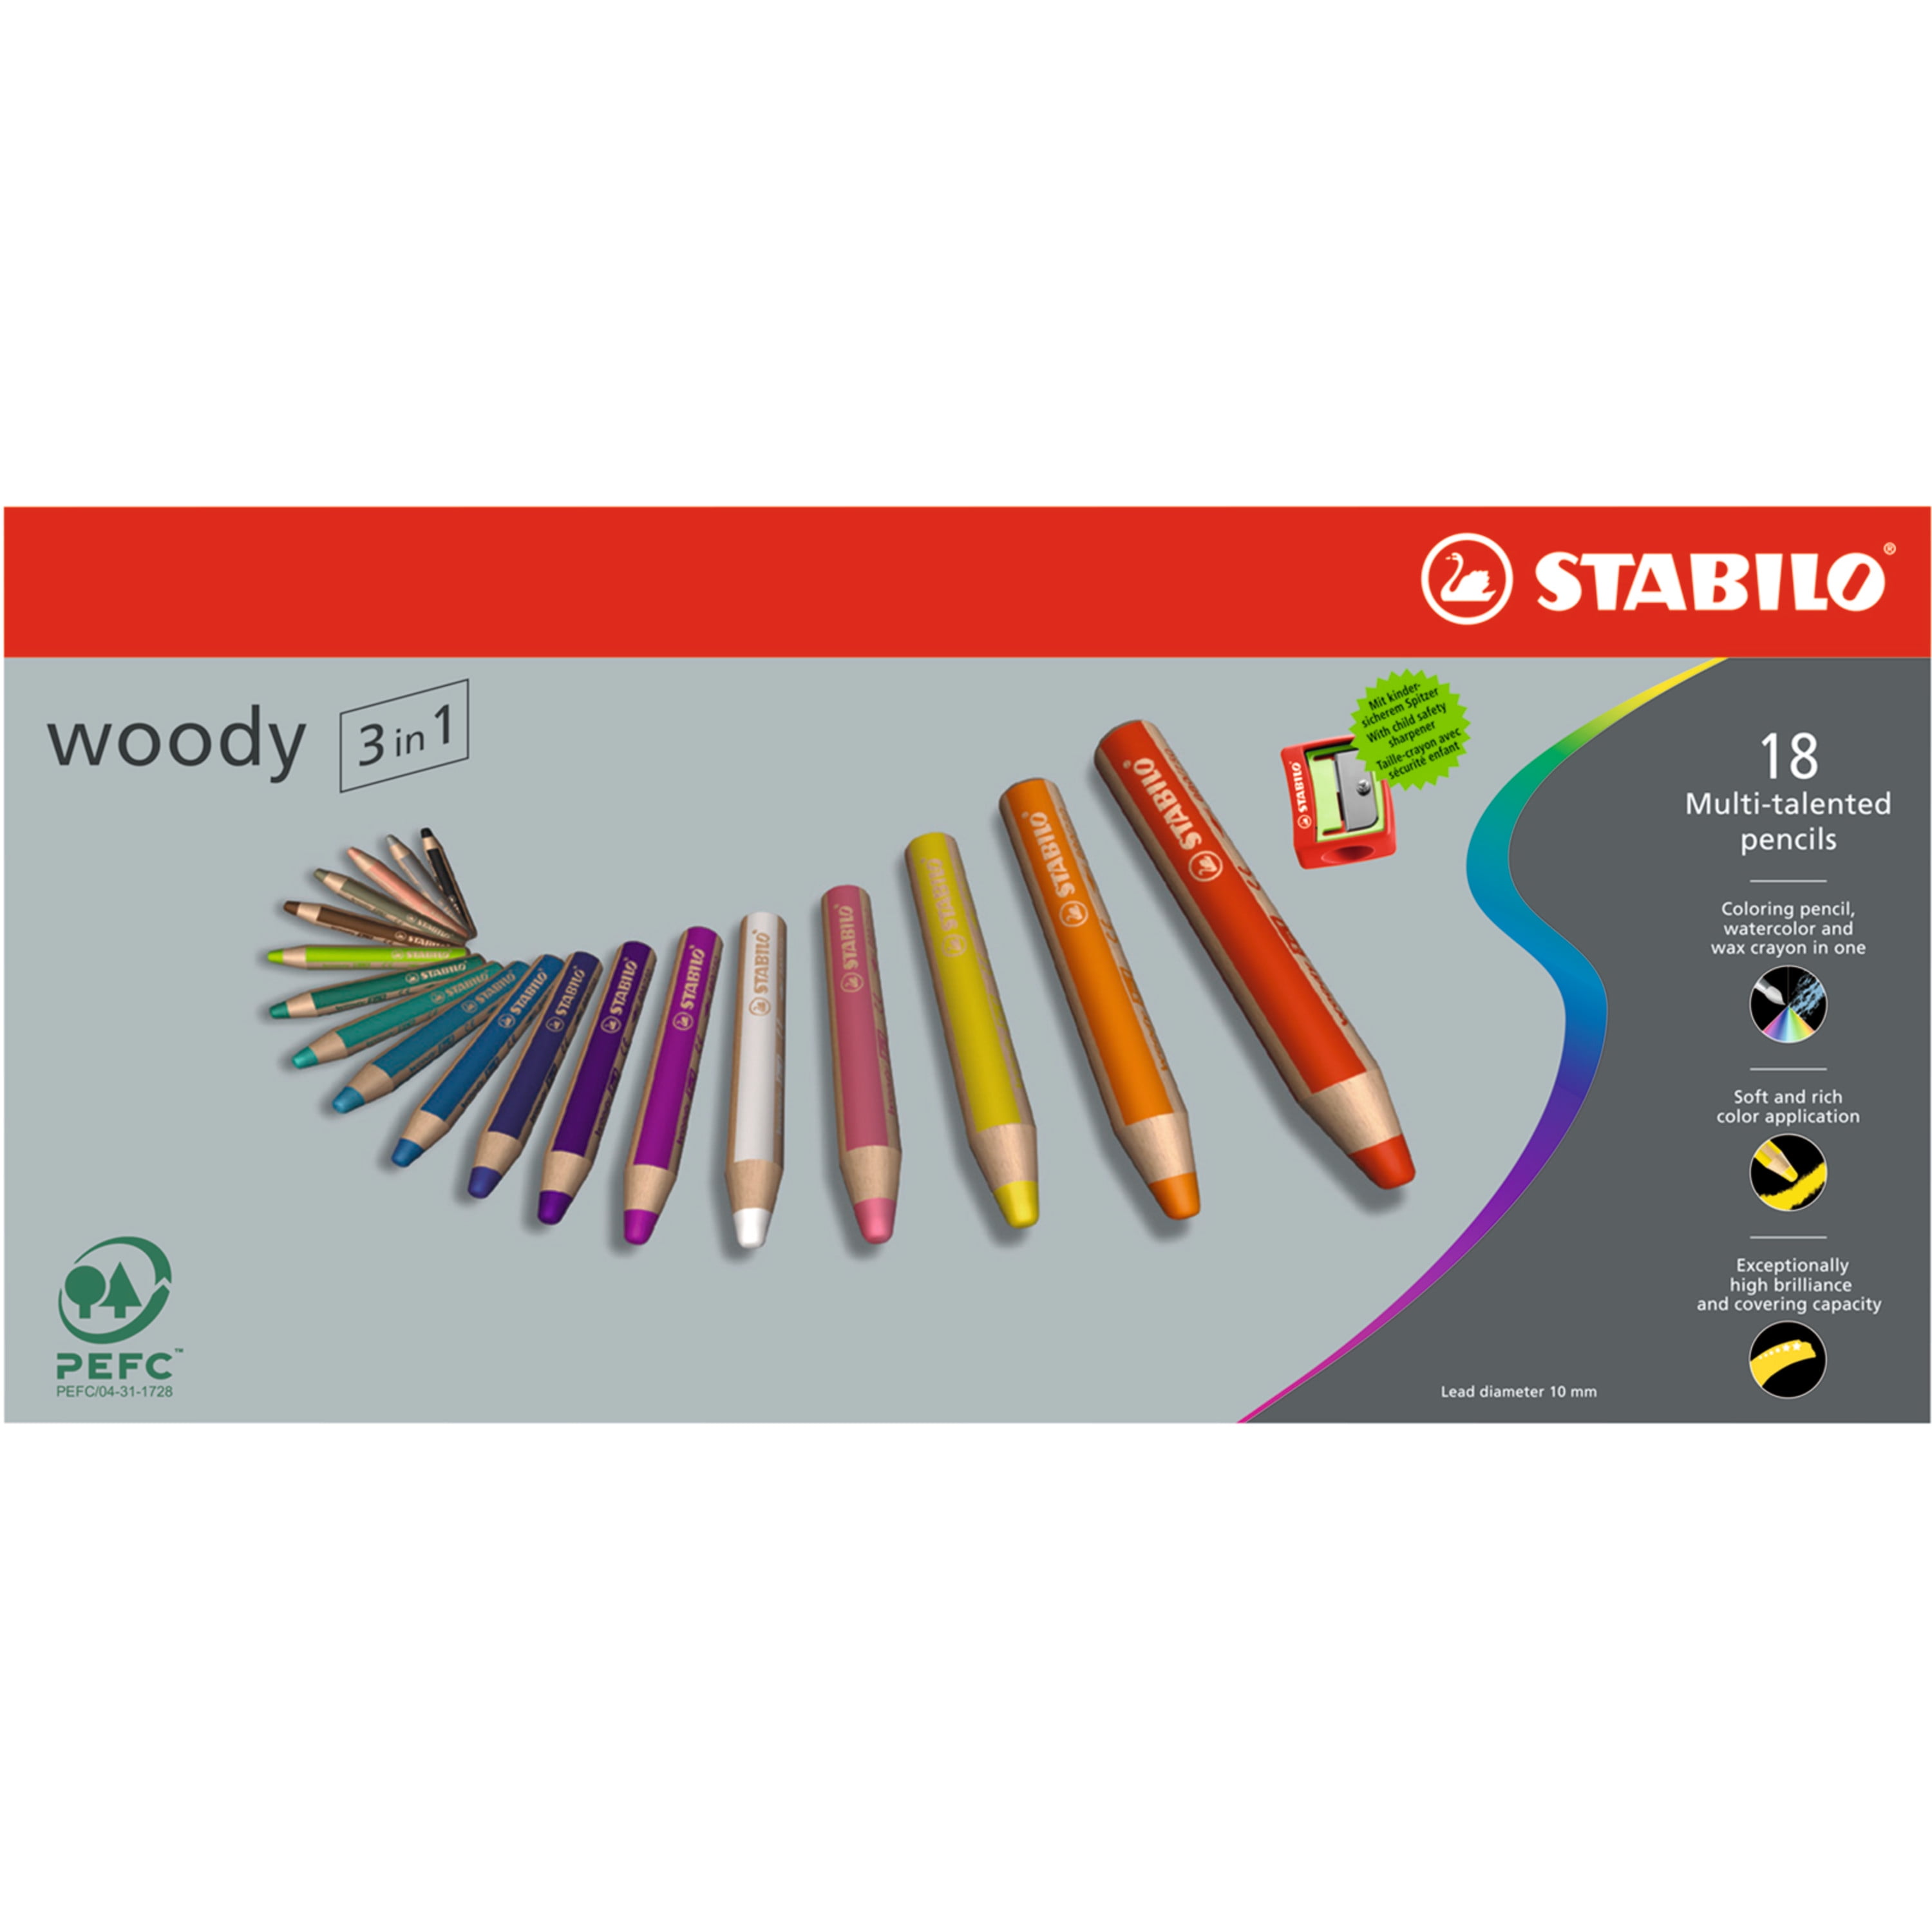 STABILO Woody in 1, 18-Color Walmart.com